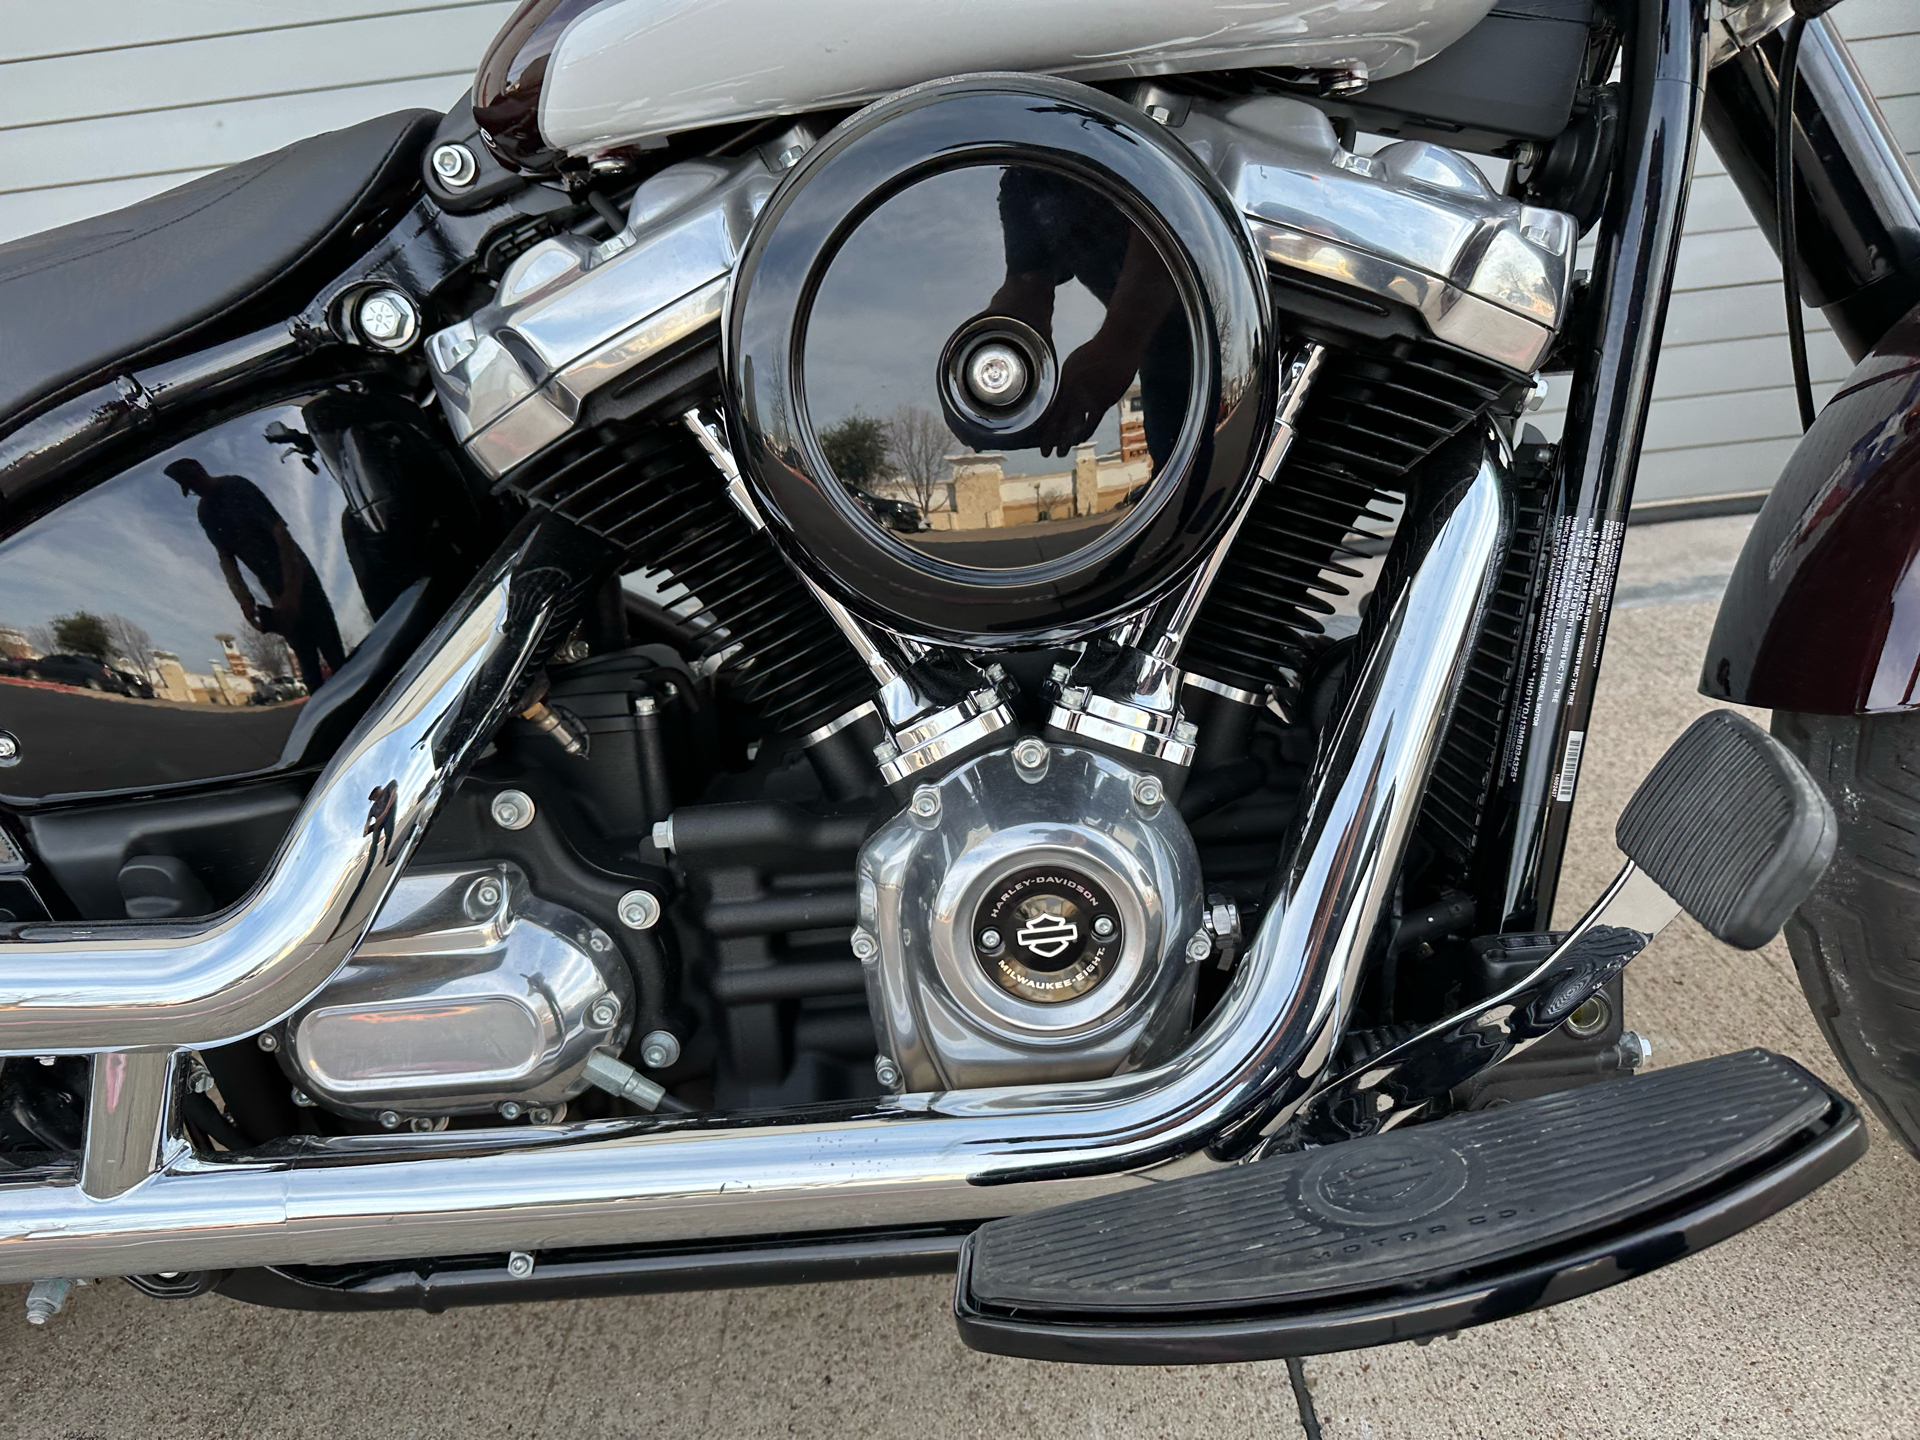 2021 Harley-Davidson Softail Slim® in Grand Prairie, Texas - Photo 4